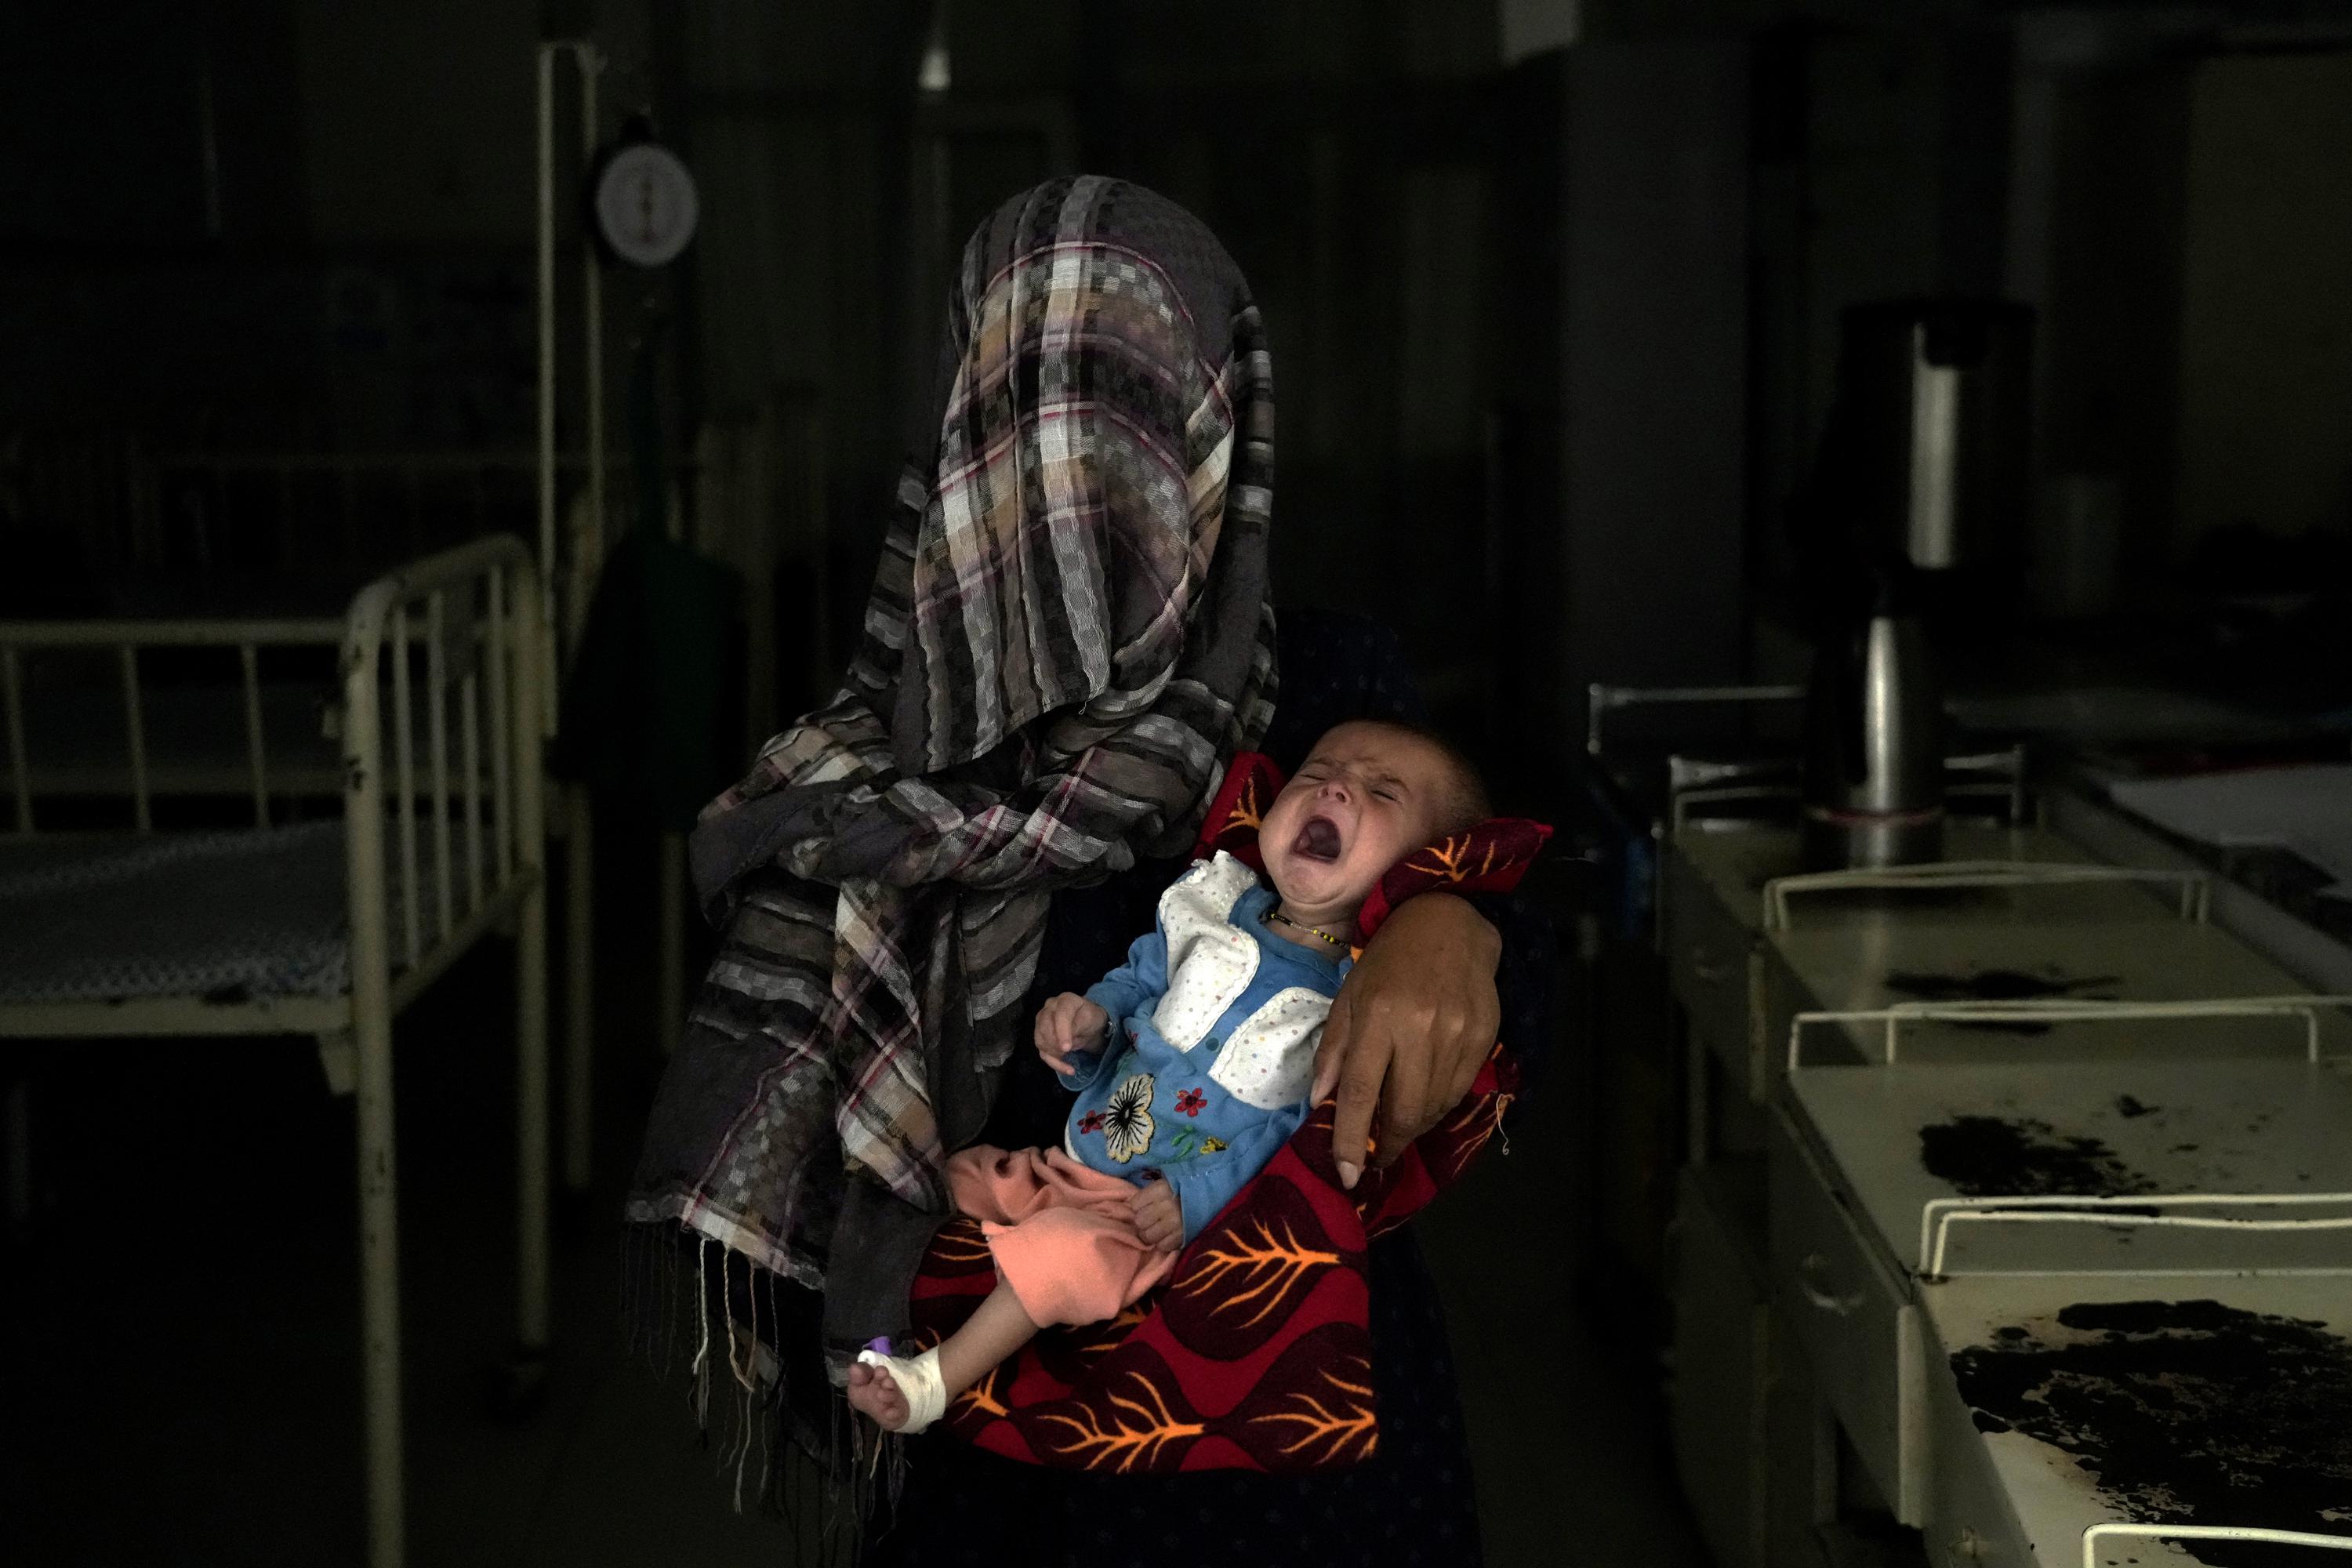 1.1 million Afghan children could face severe malnutrition